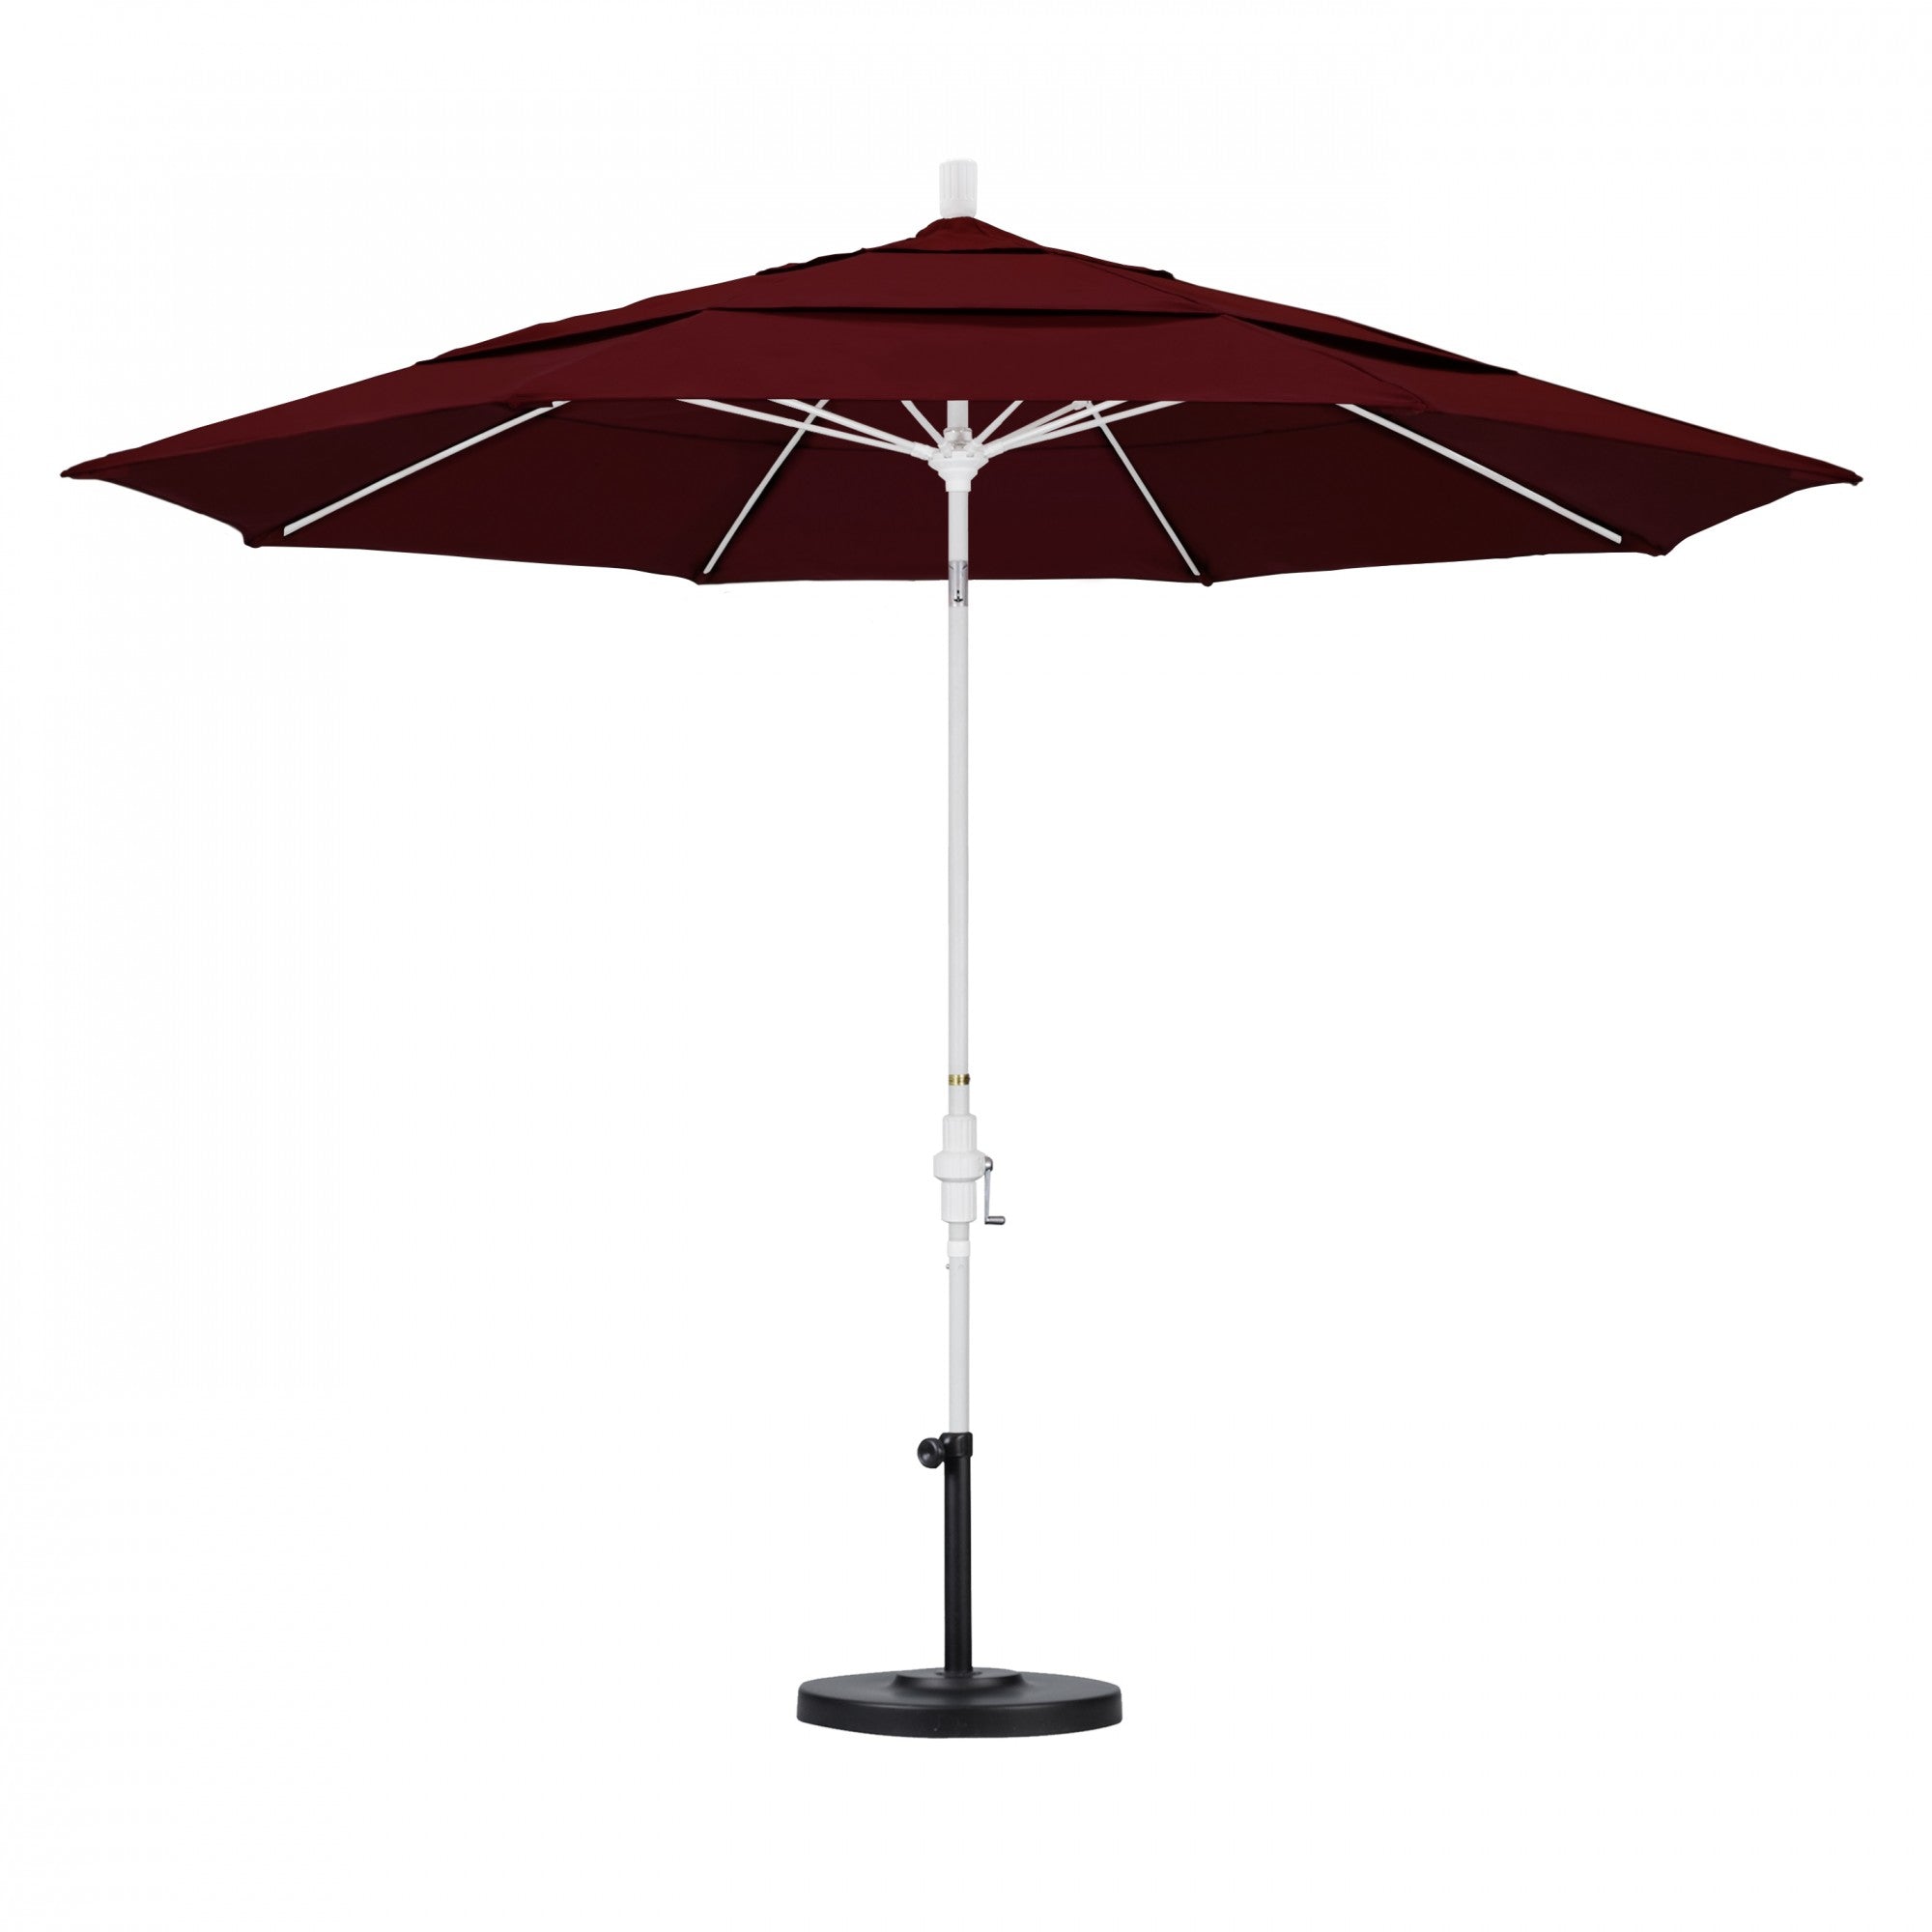 California Umbrella - 11' - Patio Umbrella Umbrella - Aluminum Pole - Burgundy - Pacifica - GSCUF118170-SA36-DWV